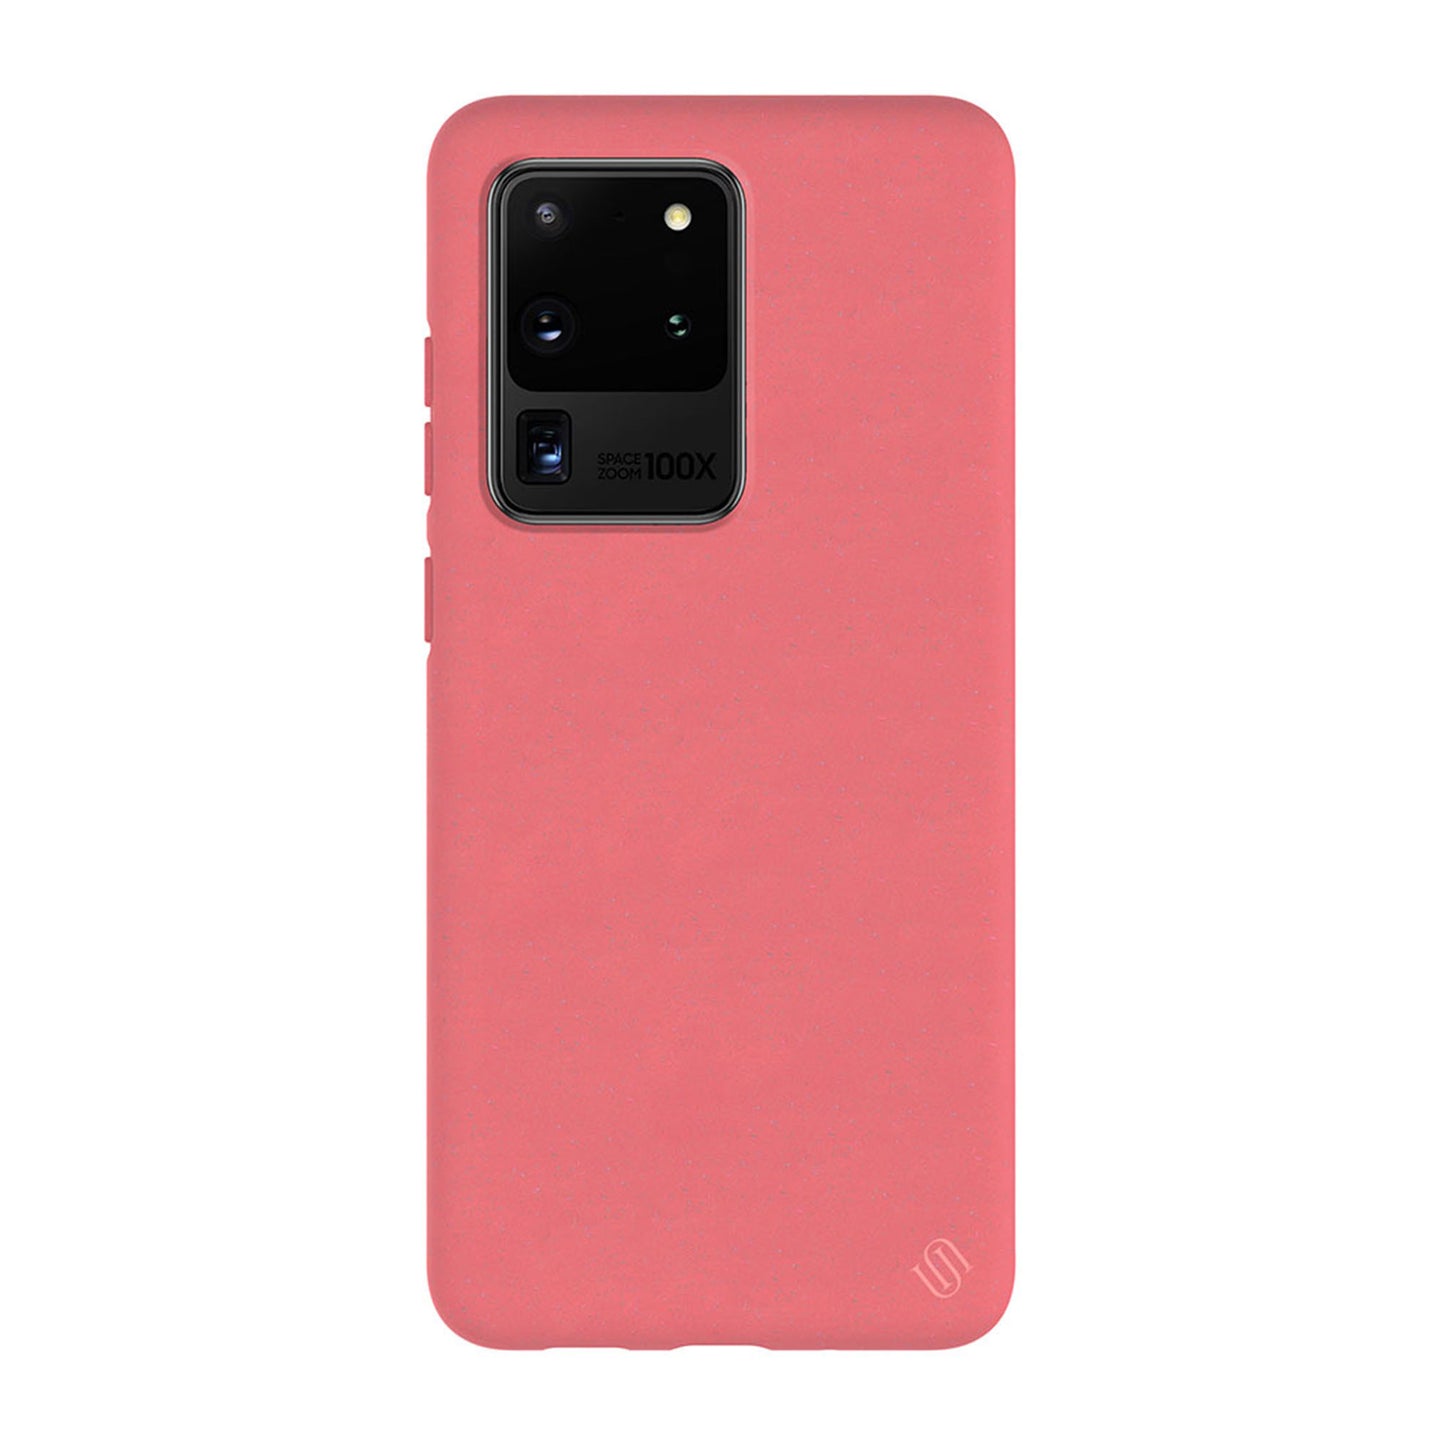 Samsung Galaxy S20 Ultra 5G Uunique Pink (Coral Lychee) Nutrisiti Eco Back Case - 15-06641